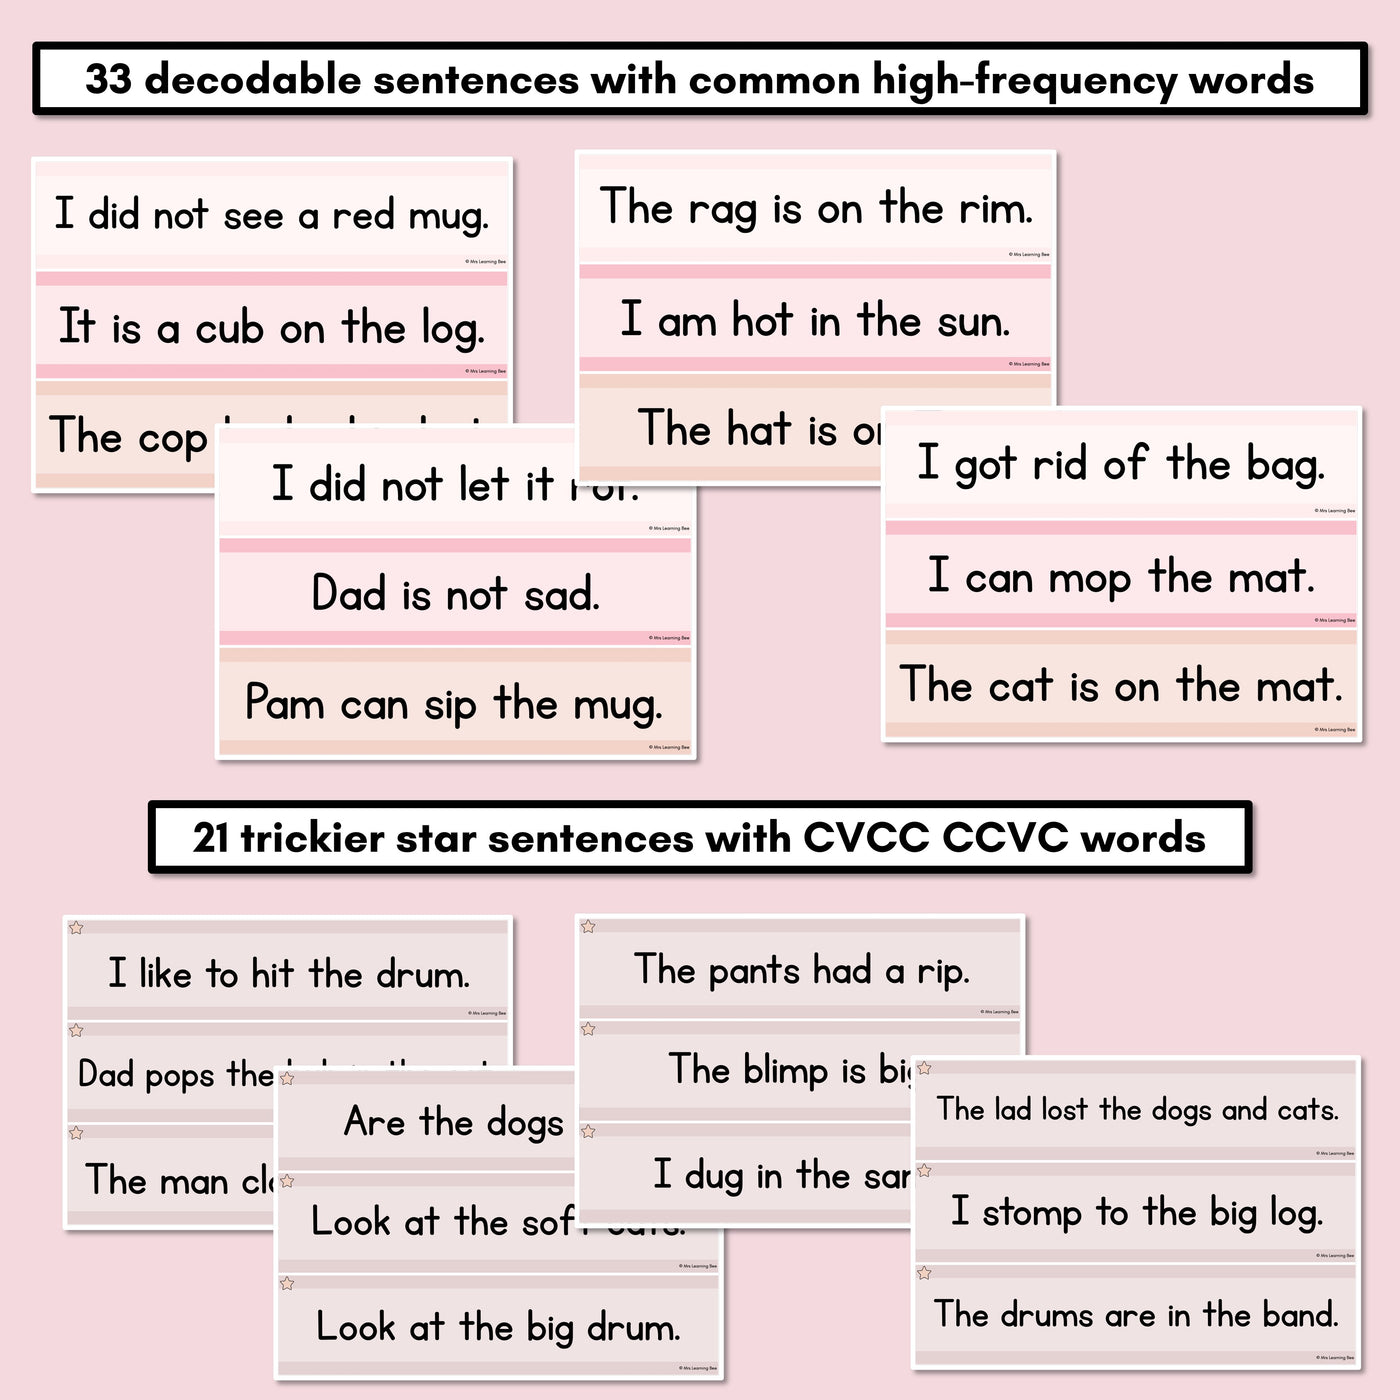 Neutral CVC CVCC CCVC Decodable Words and Sentence Cards - Set 2 - r l d b h o u c